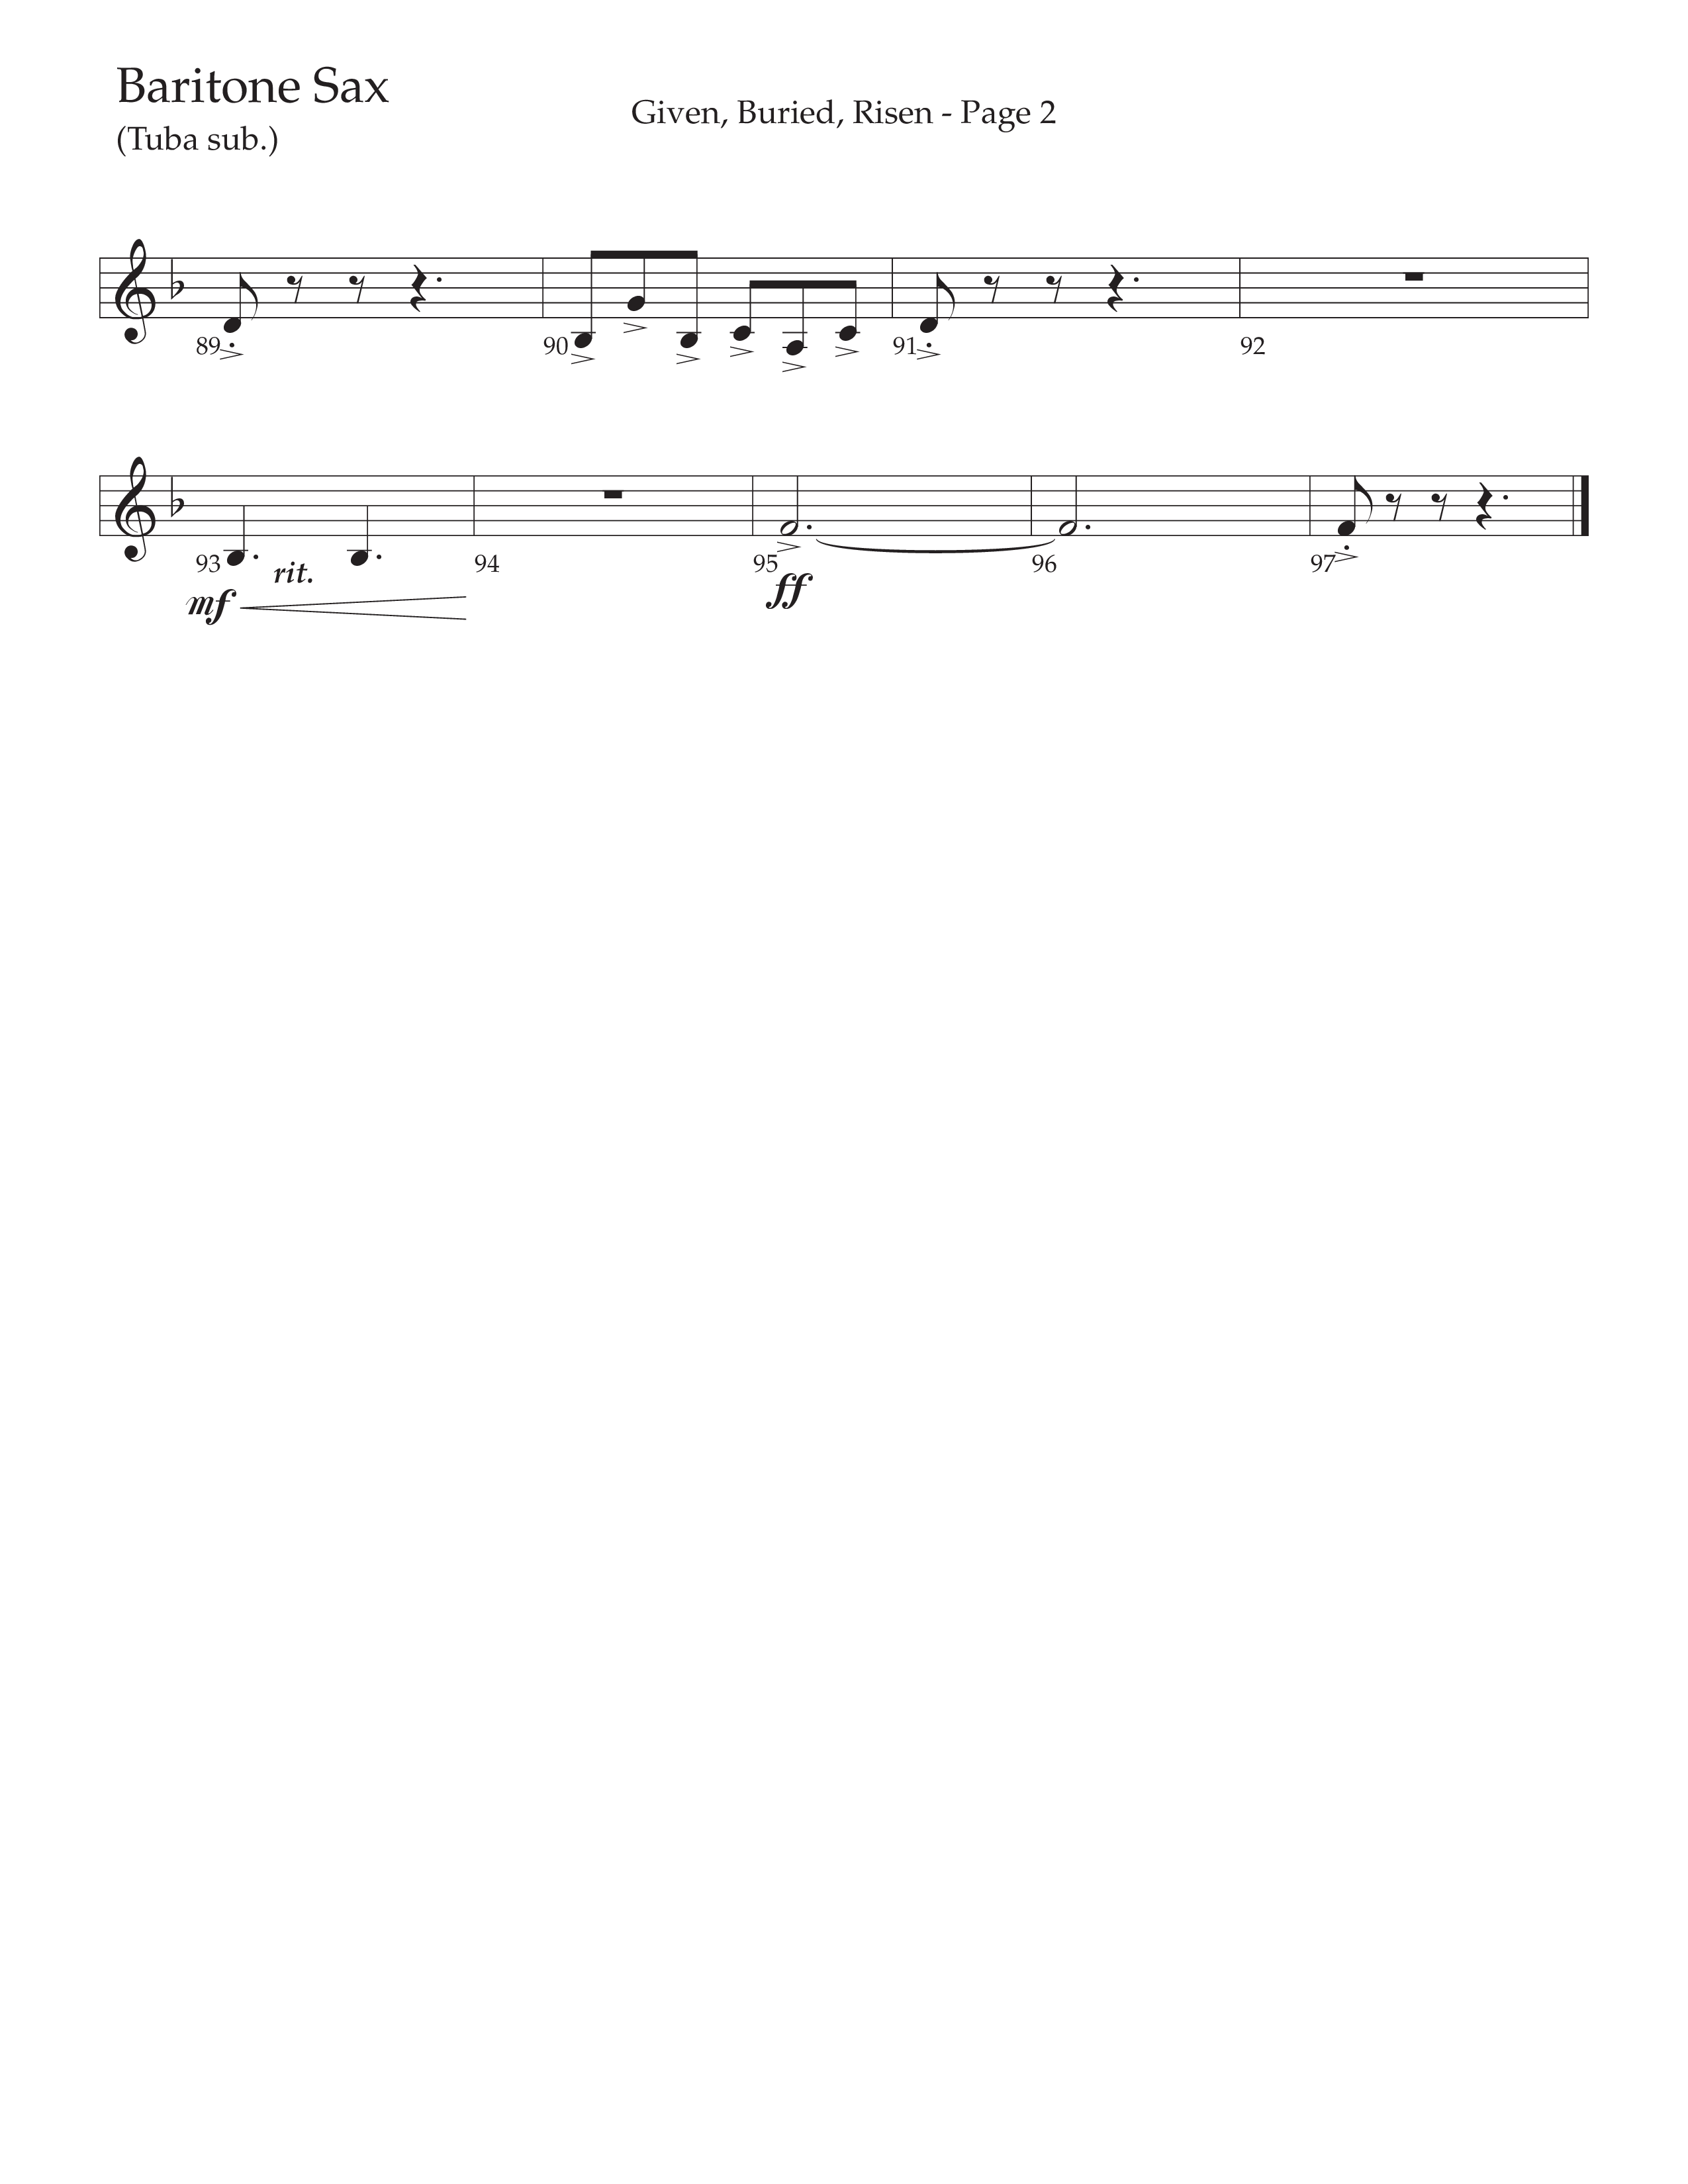 Given Buried Risen (Choral Anthem SATB) Bari Sax (Daywind Worship / Arr. Phil Nitz)